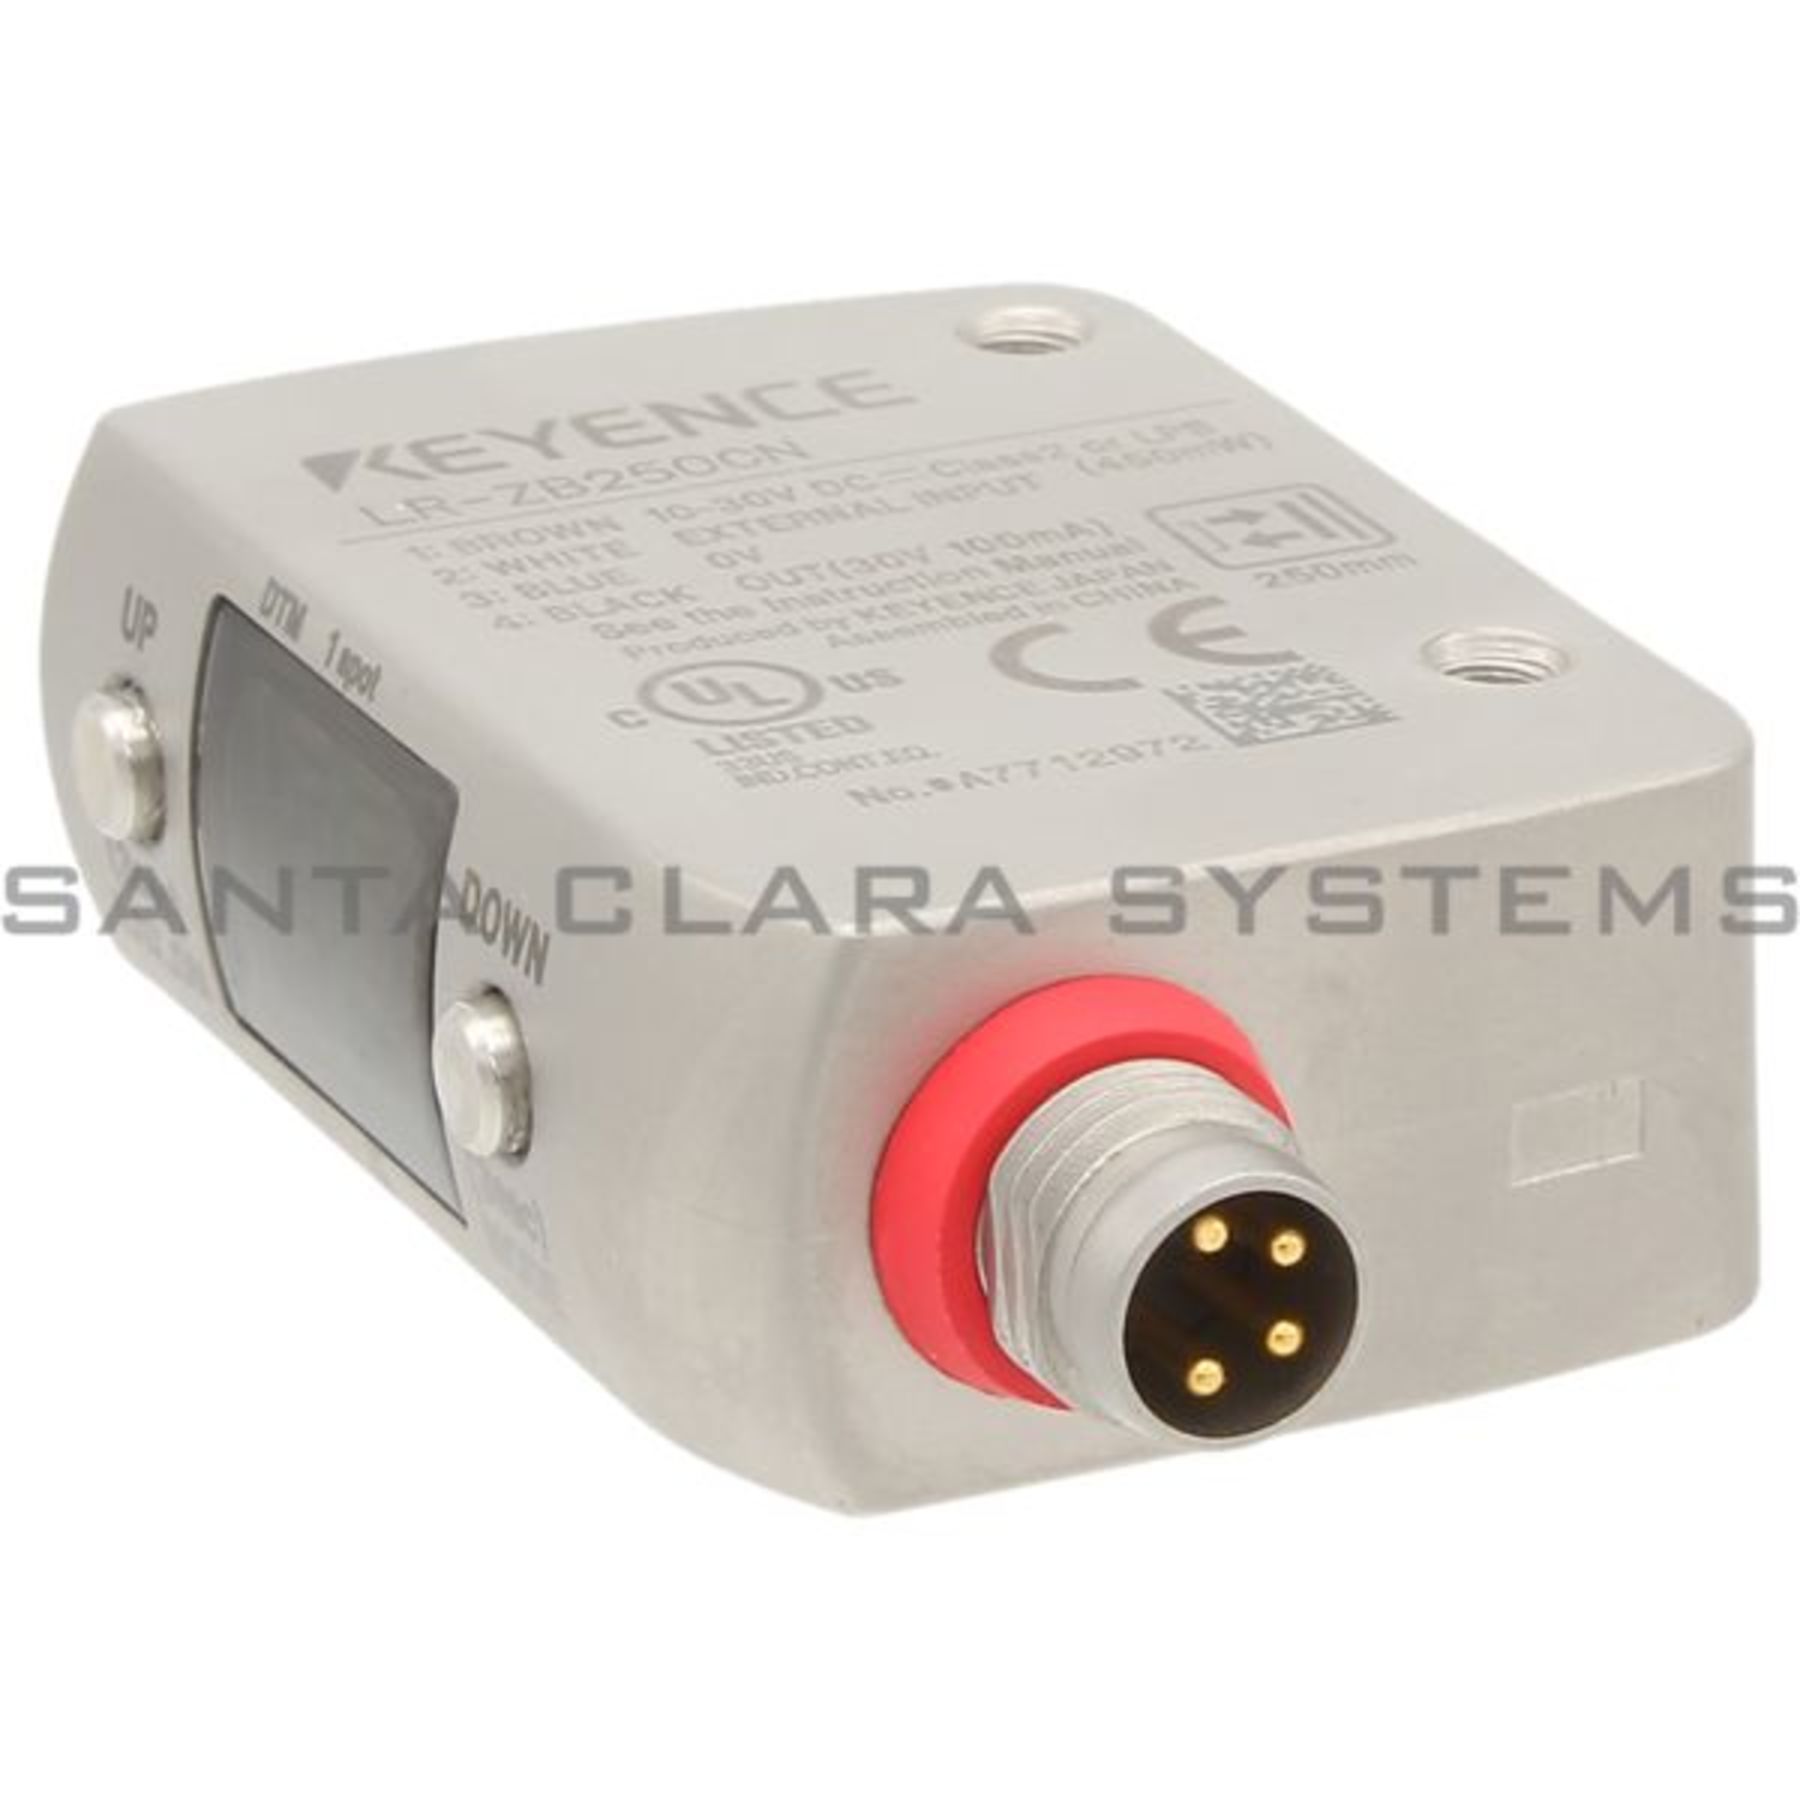 USED Laser Sensor Keyence LR-ZB250CN